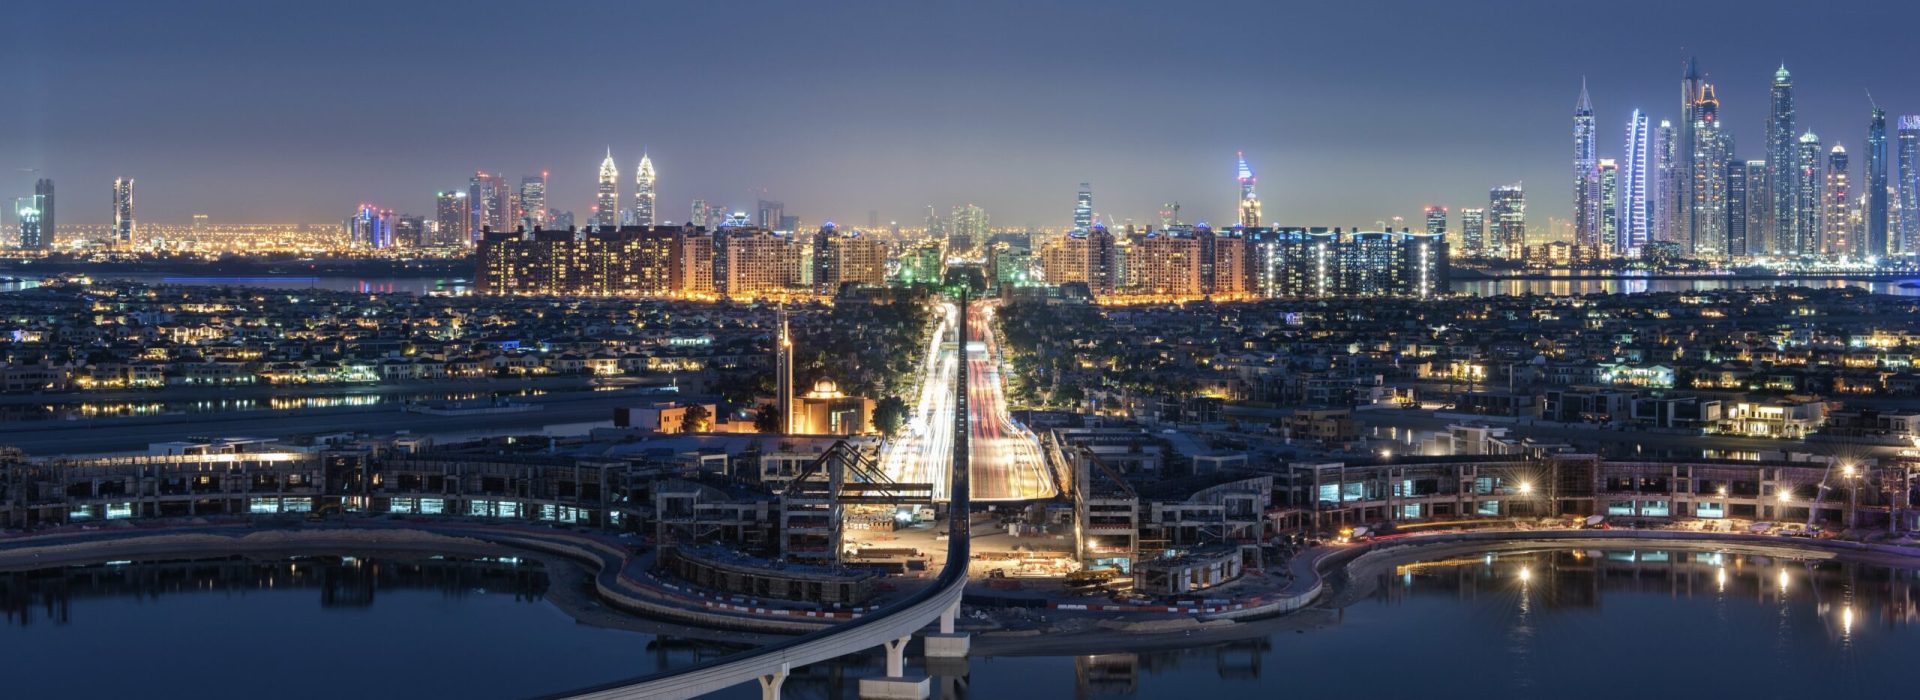 cityscape-of-dubai-united-arab-emirates-at-dusk-2022-03-04-02-15-07-utc-min